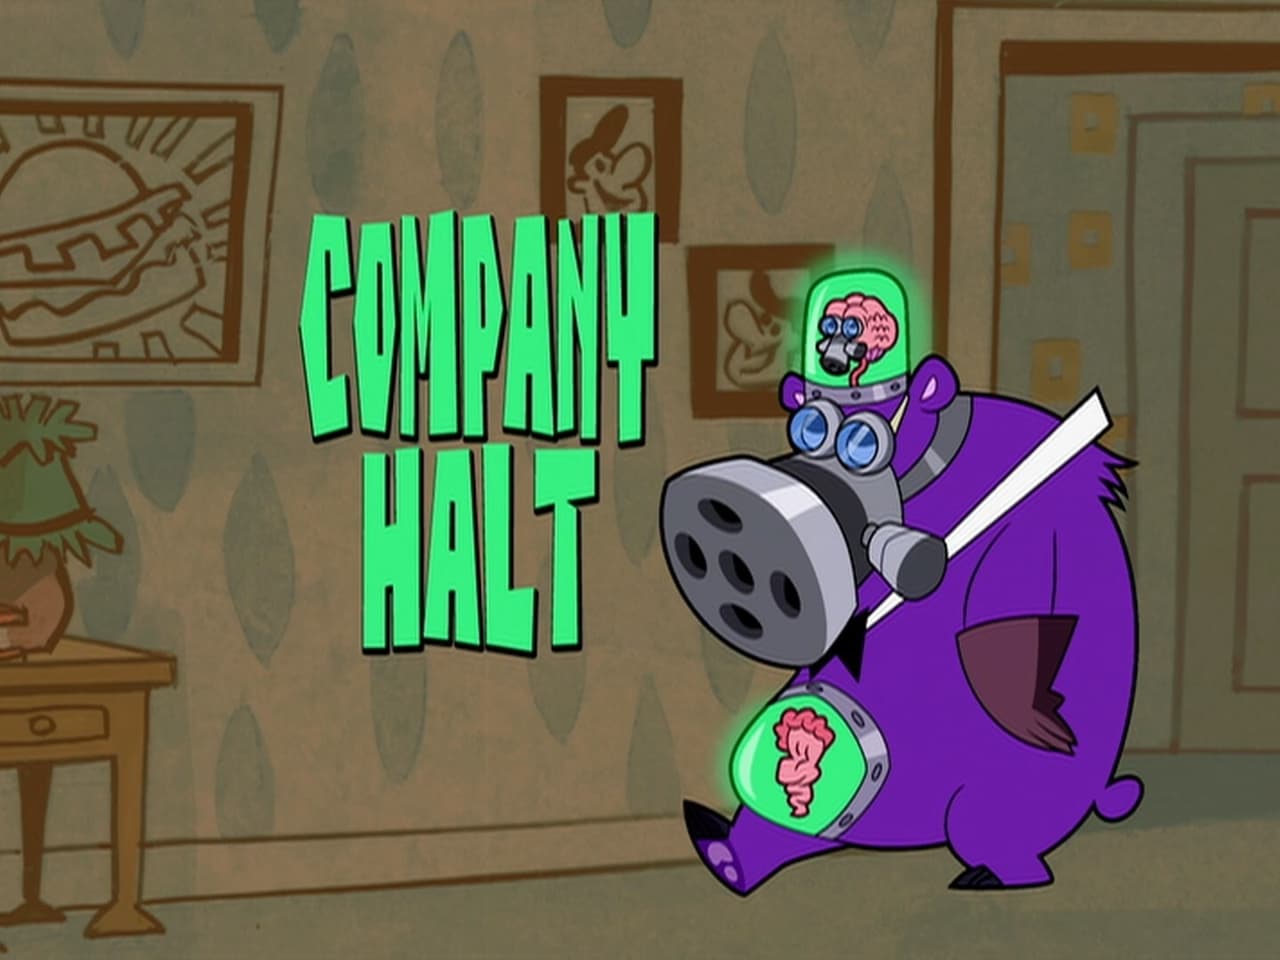 Company Halt